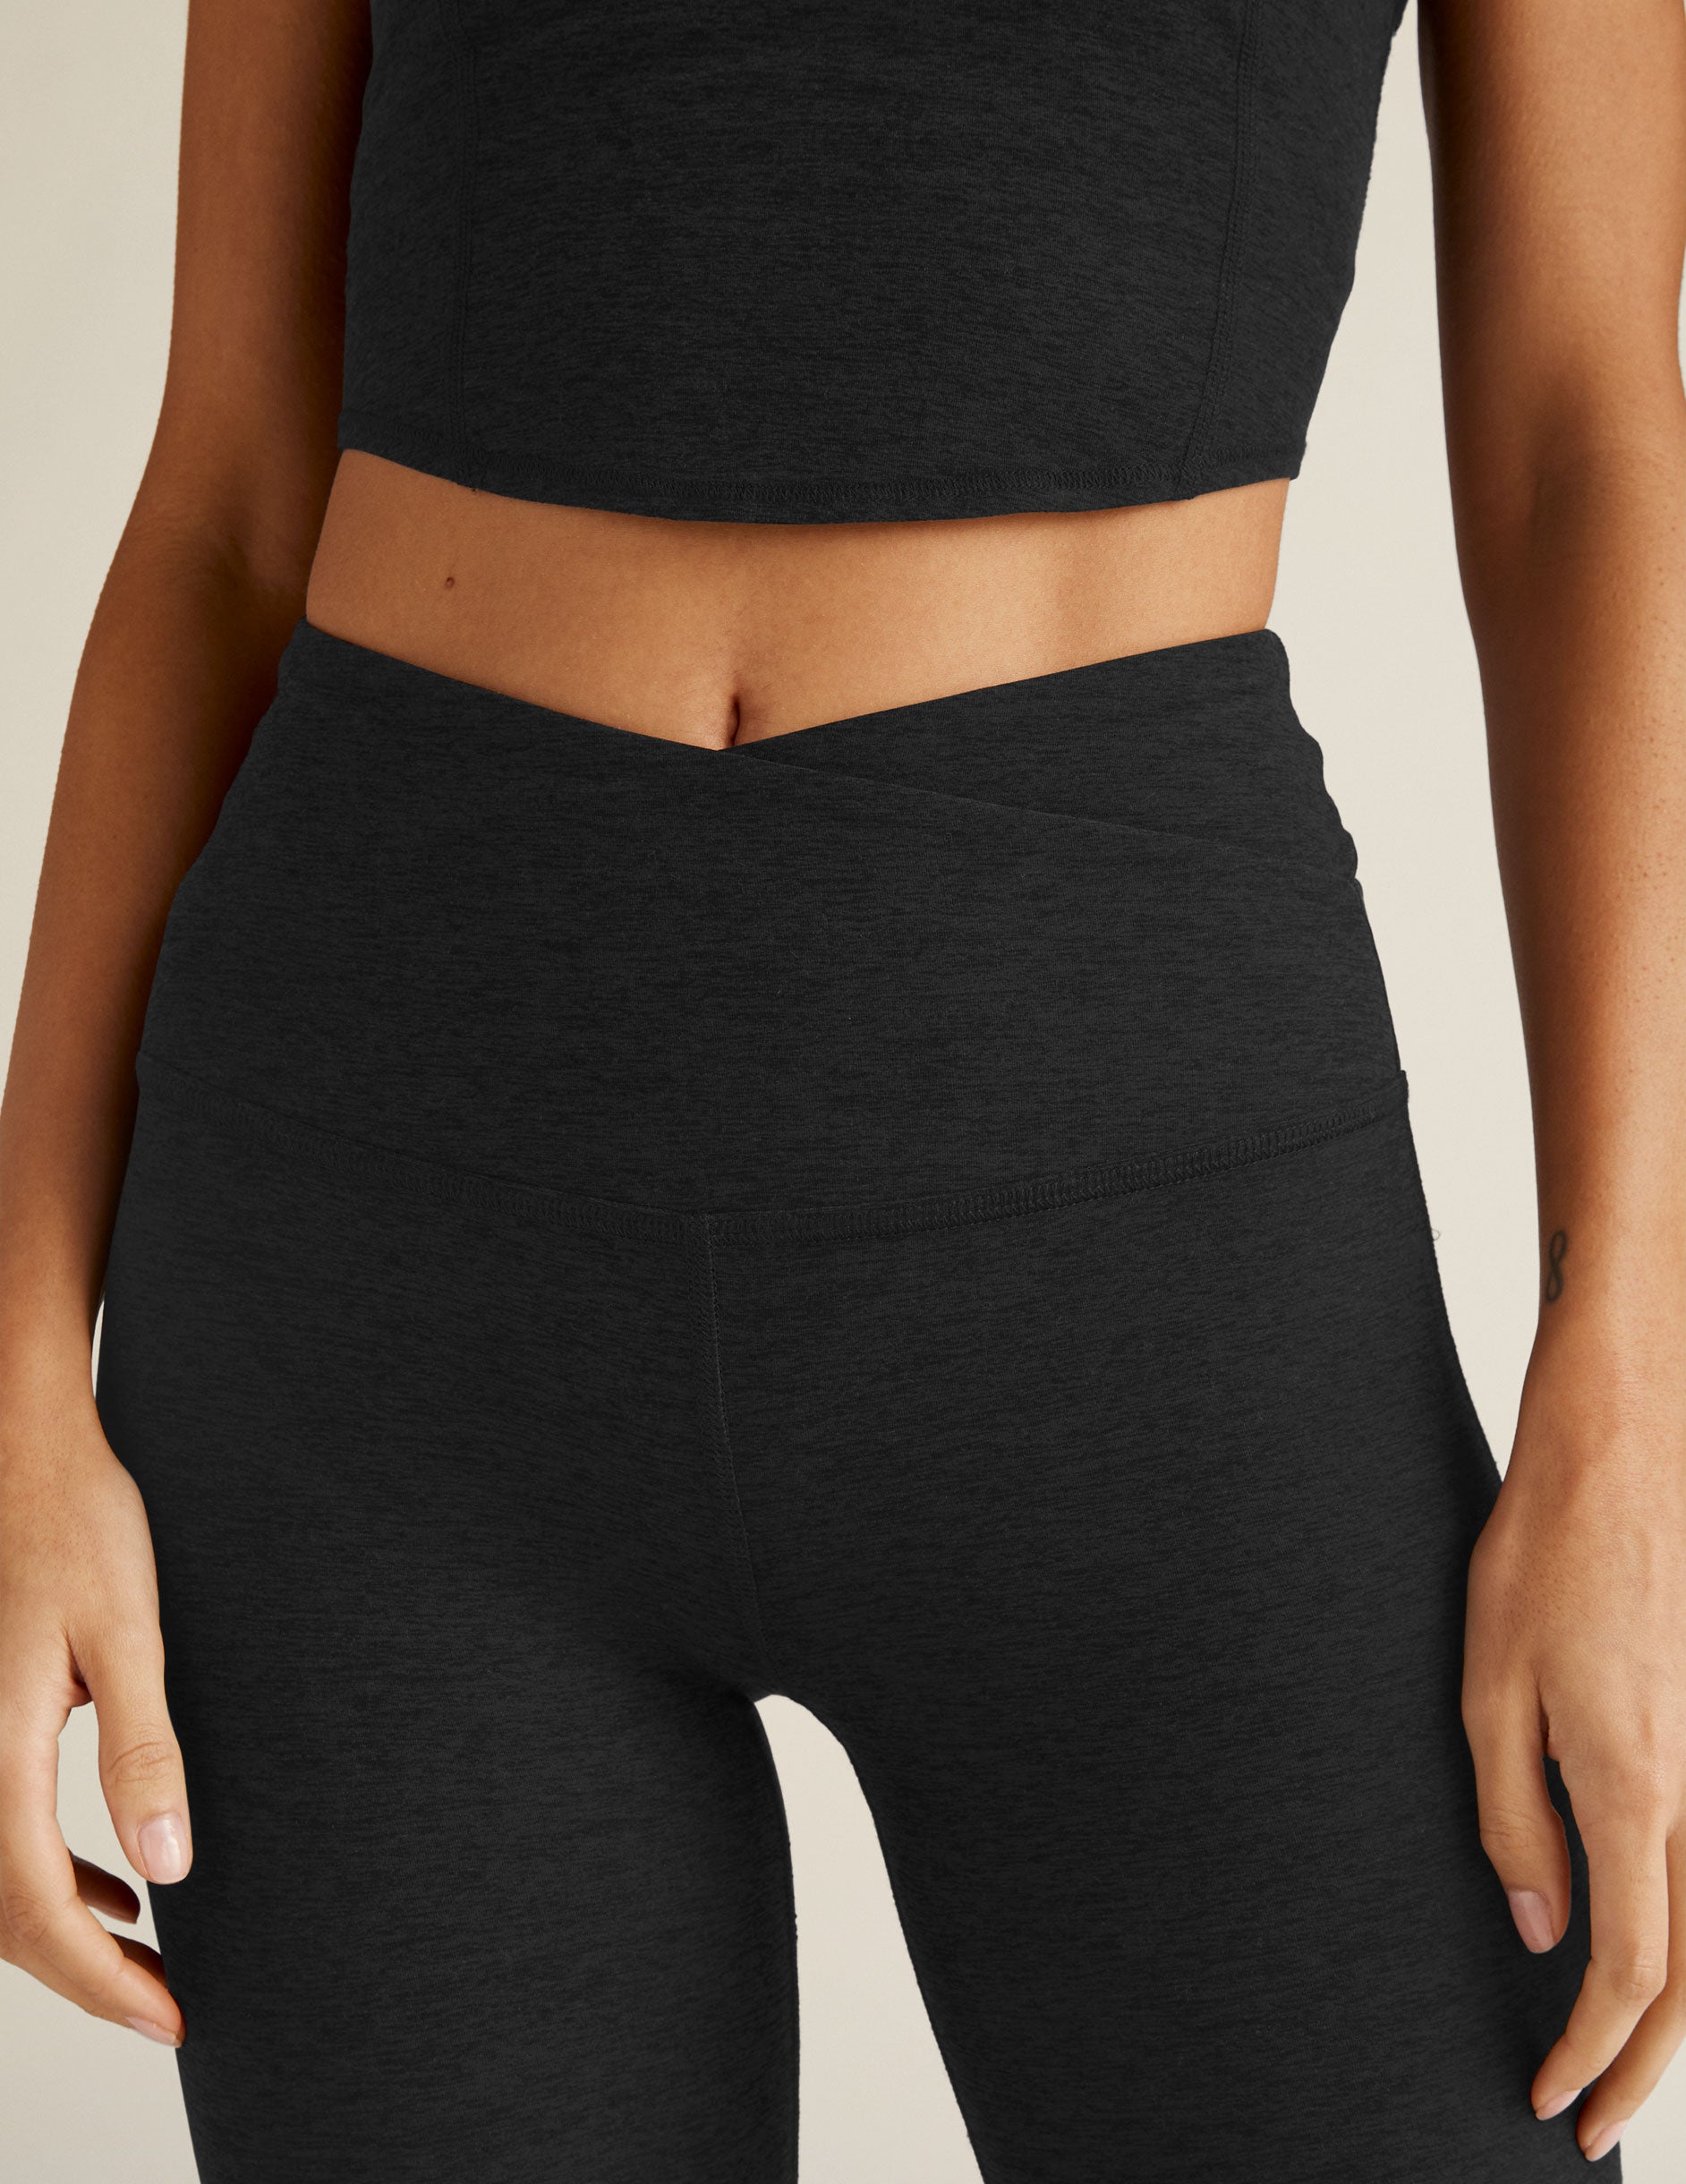  uSecee Bootcut Yoga Pants for Women High Waist